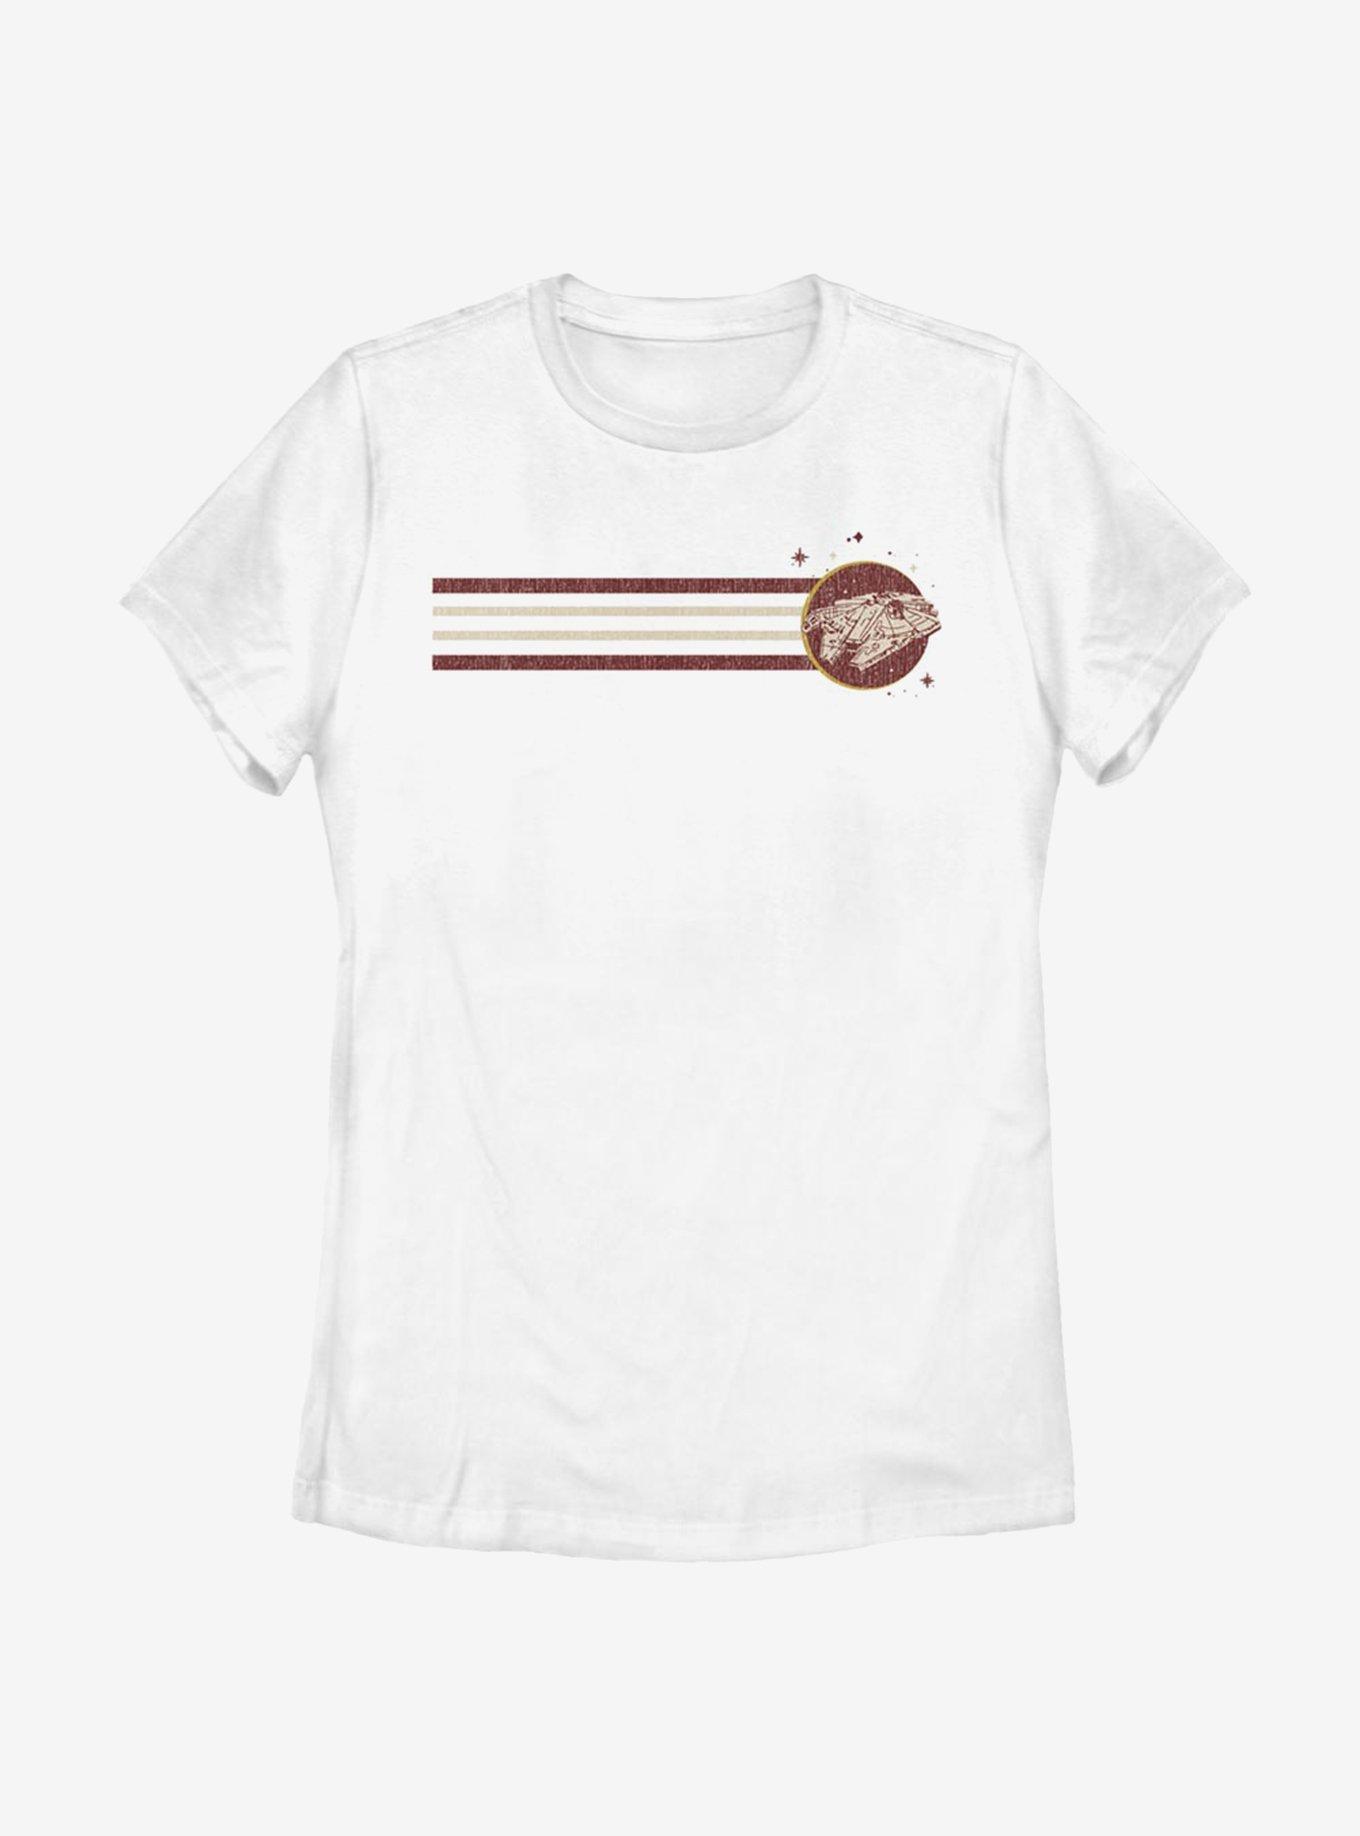 Star Wars Flight Of Falcon Womens T-Shirt, WHITE, hi-res